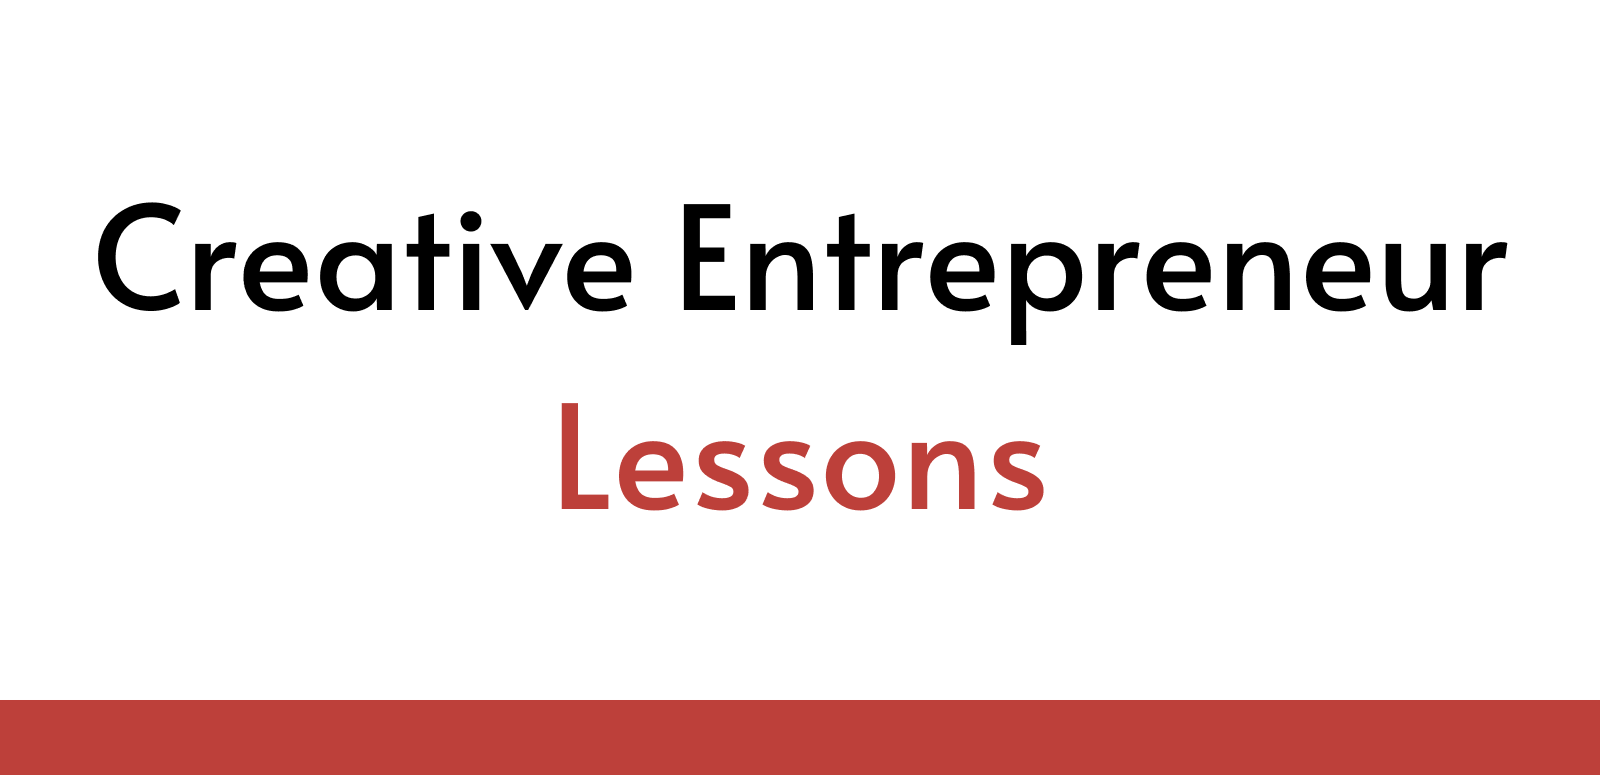 Creative Entrepreneur Lessons